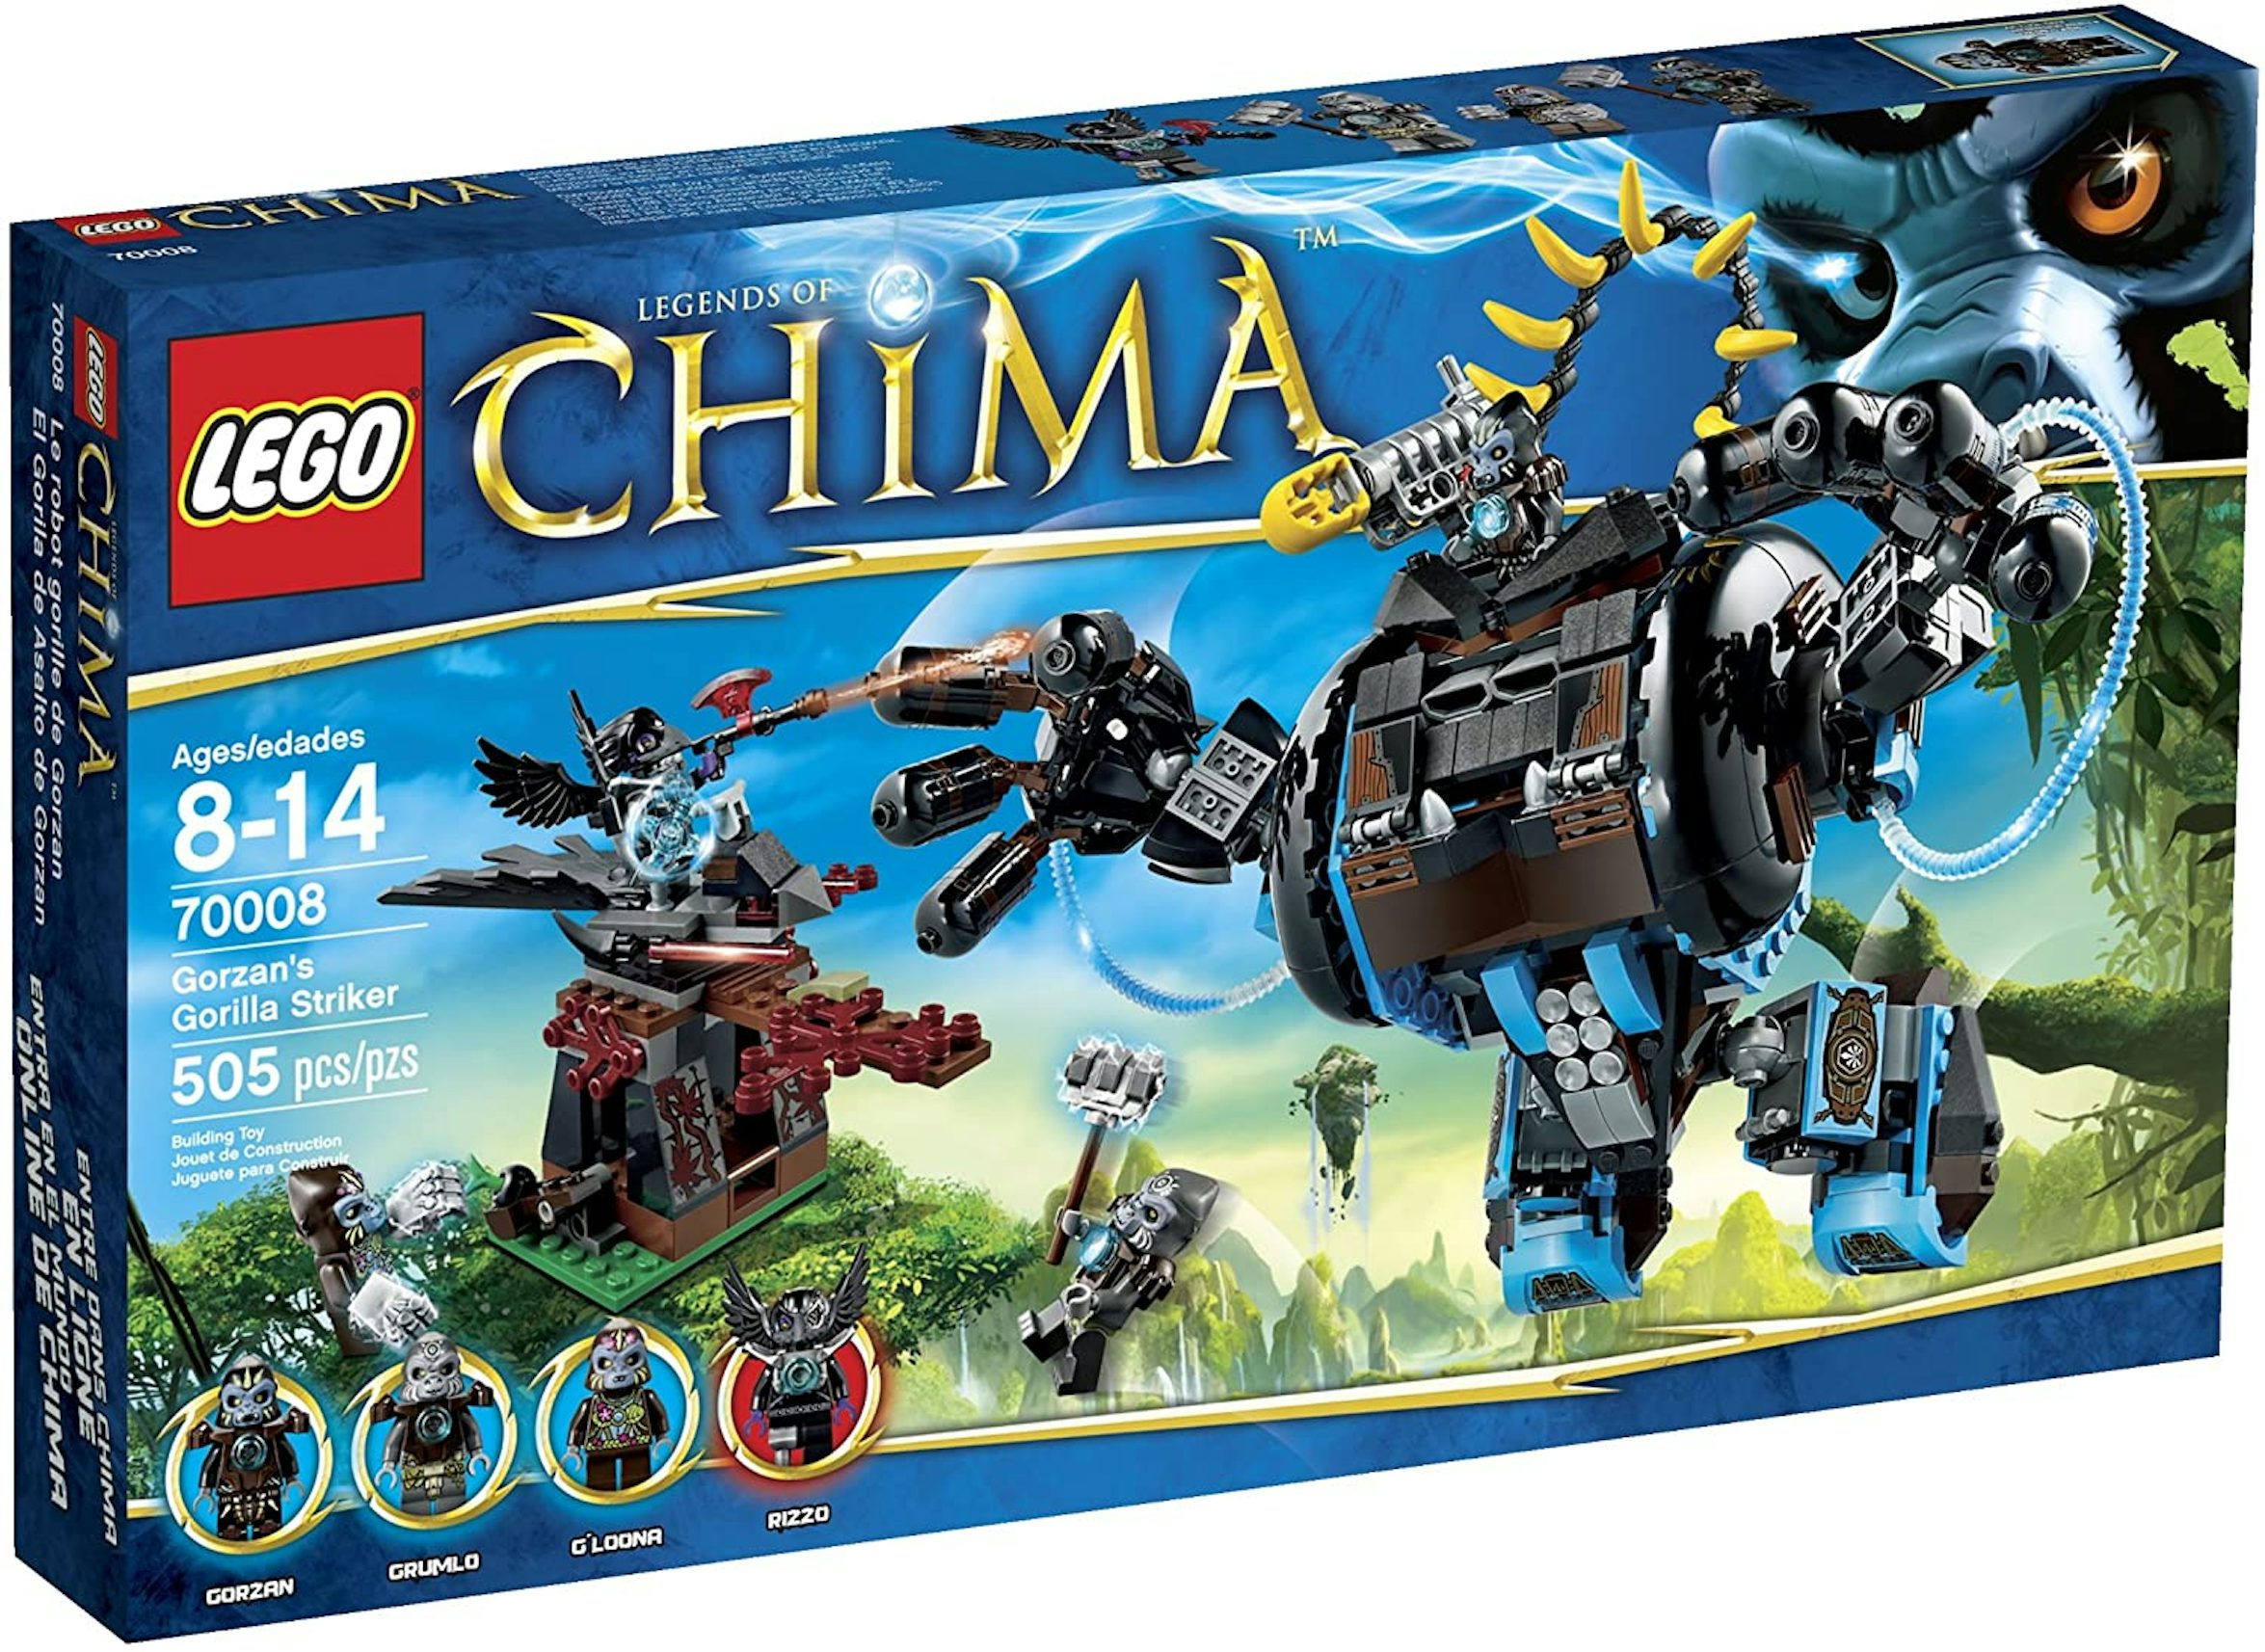 LEGO Legends of Chima Gorzan's Gorilla Striker Set 70008